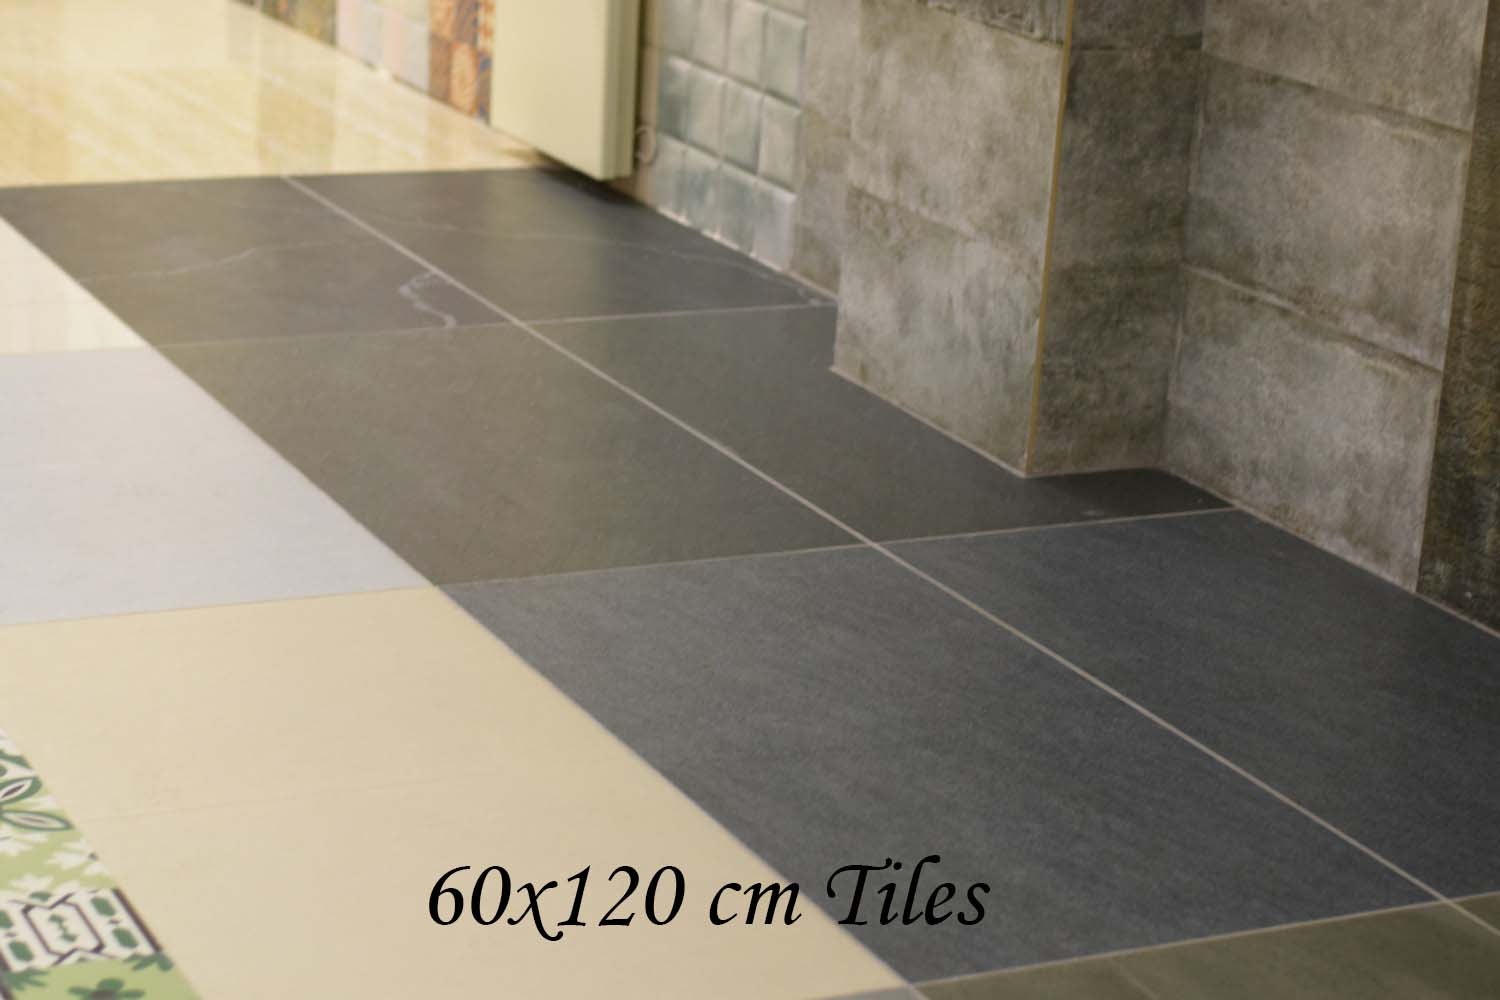 Sand Dark Rectified Large Format Matt Stone Effect Porcelain Floor & Wall Tiles 600x1200mm (4590)